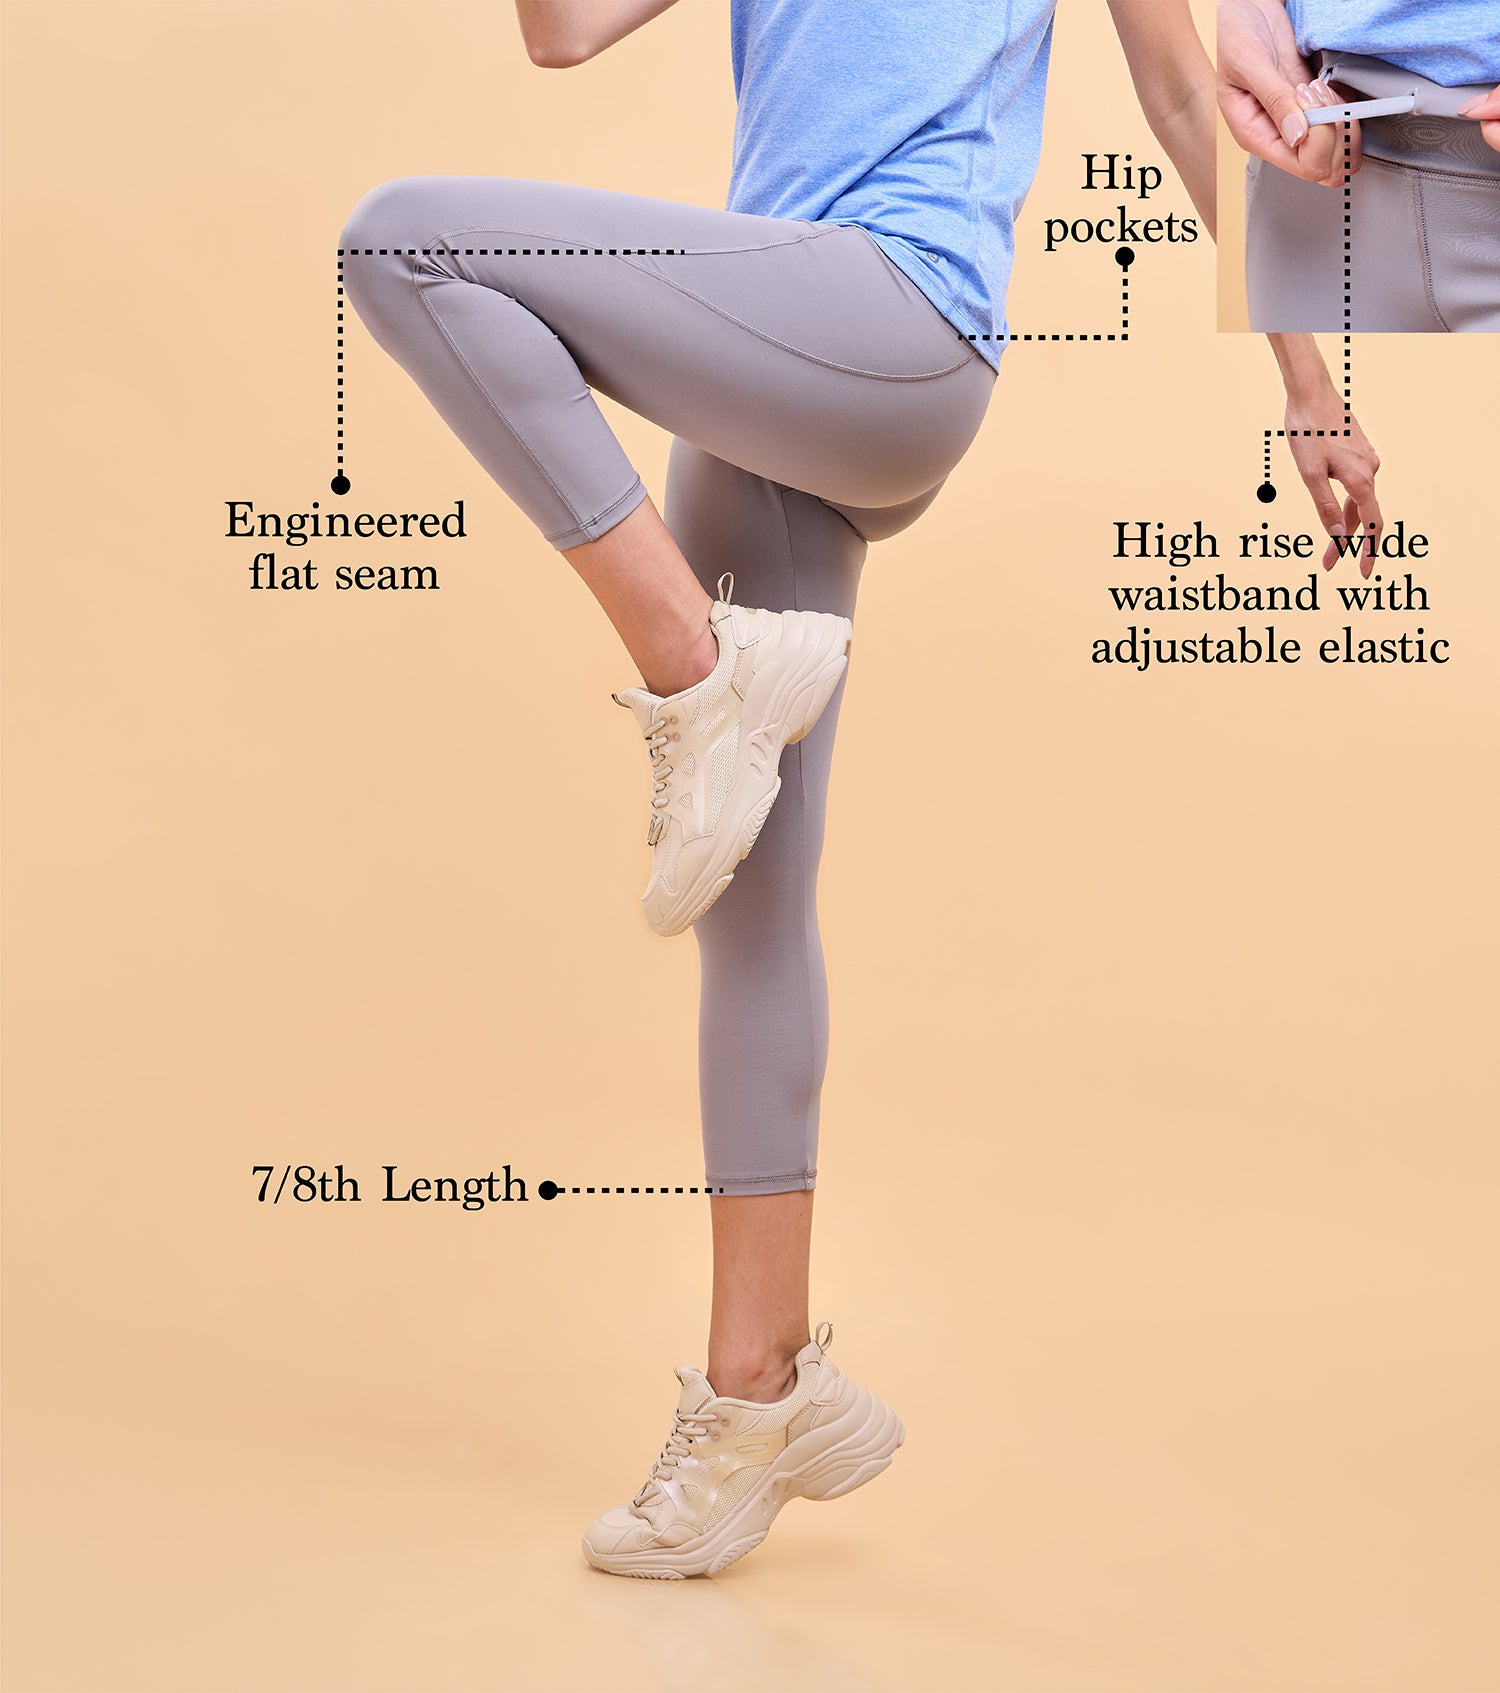 Enamor A605 Basic Workout Legging Dry Fit High Waist Basic Workout Leggings